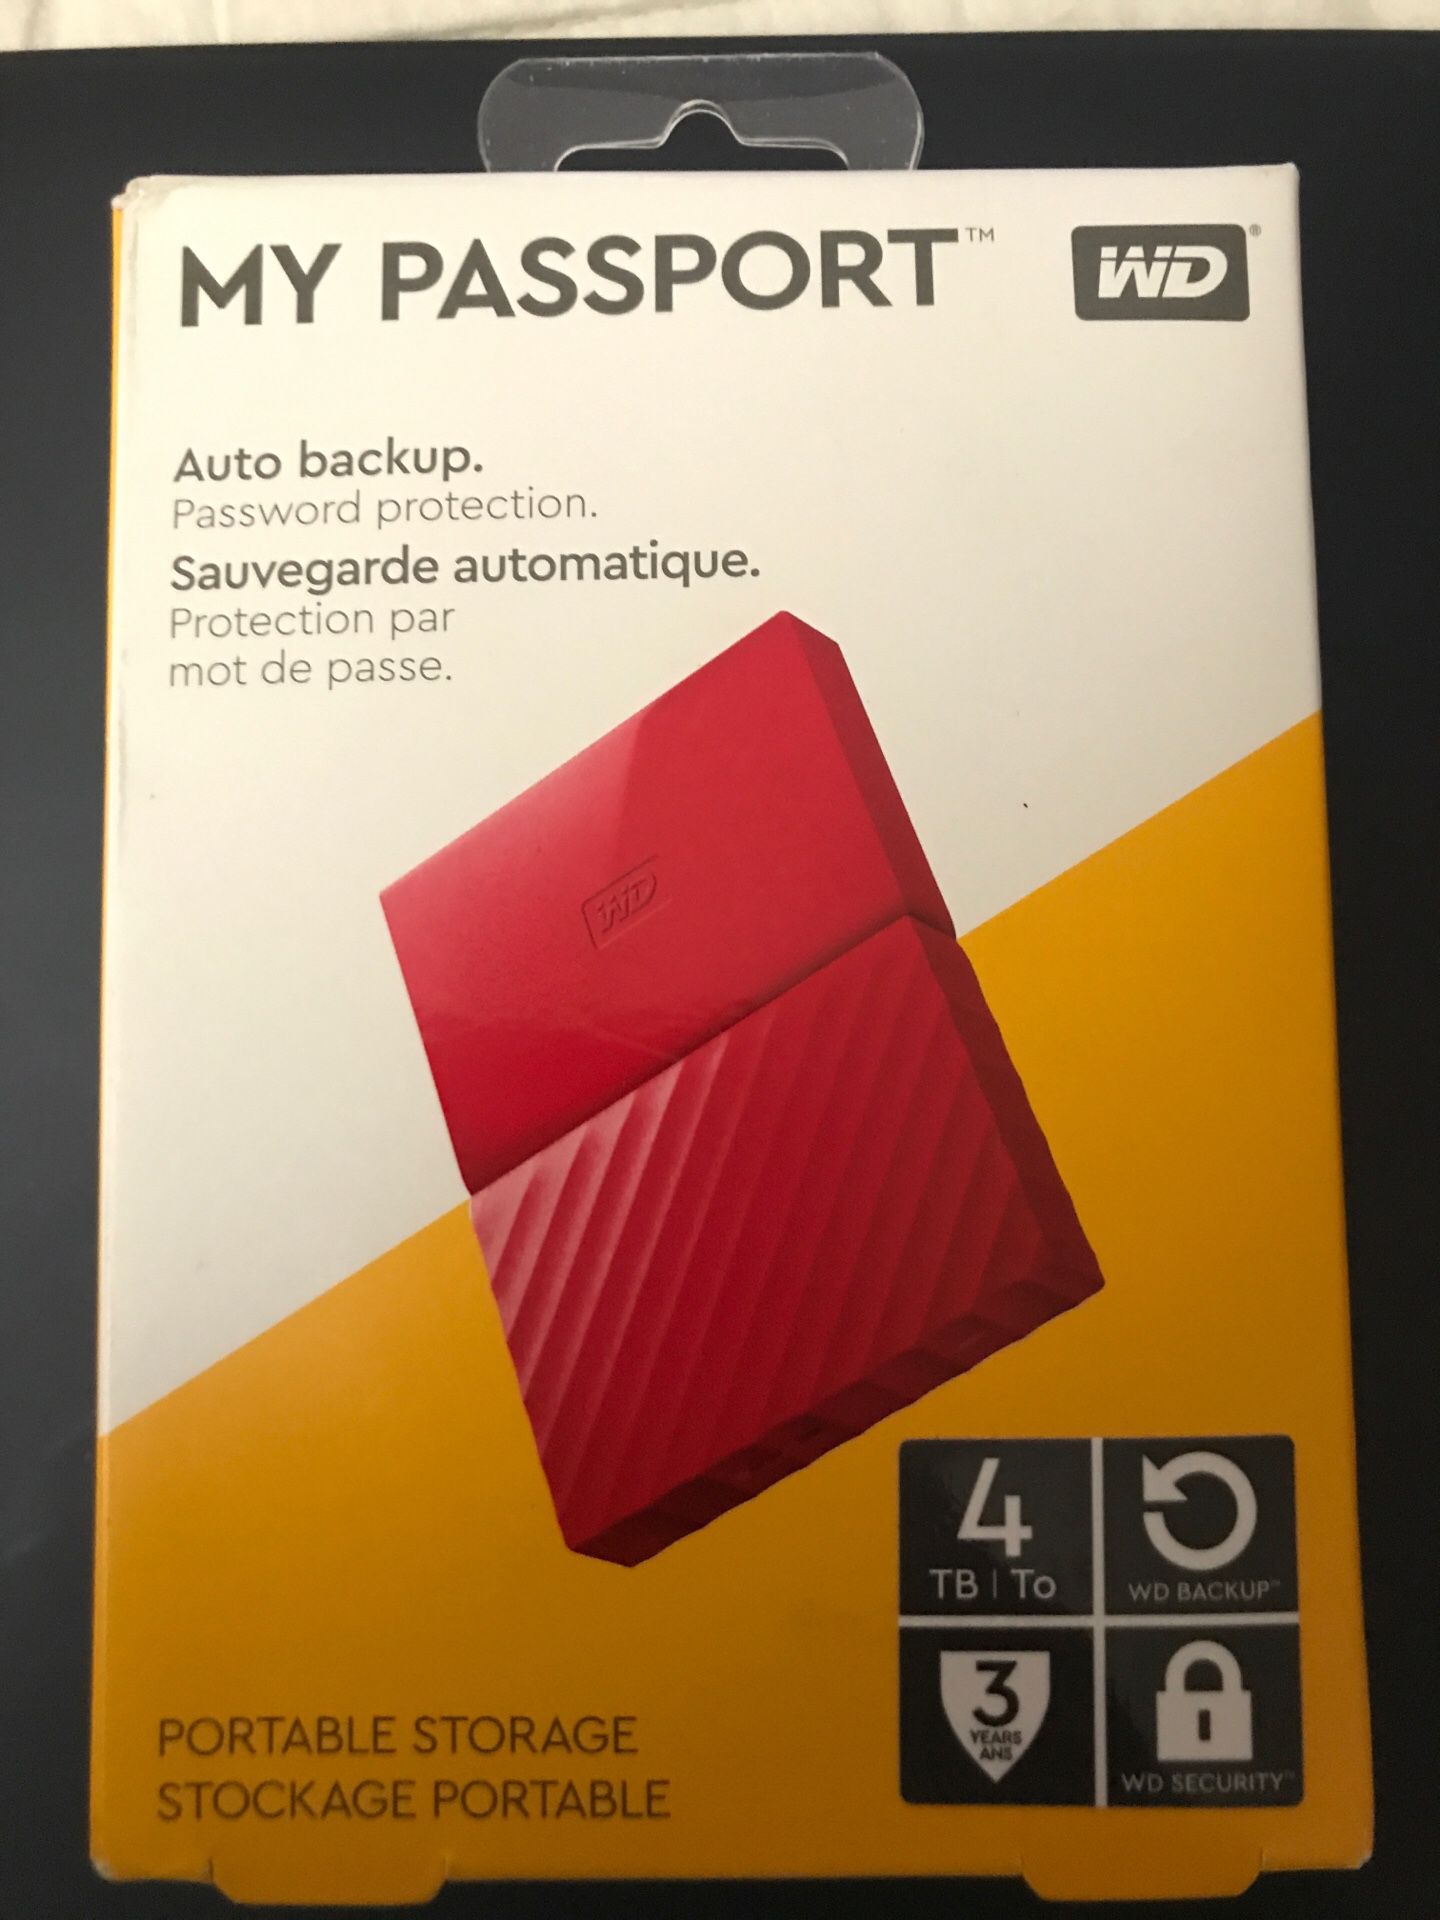 New - My Passport WD (4TB)